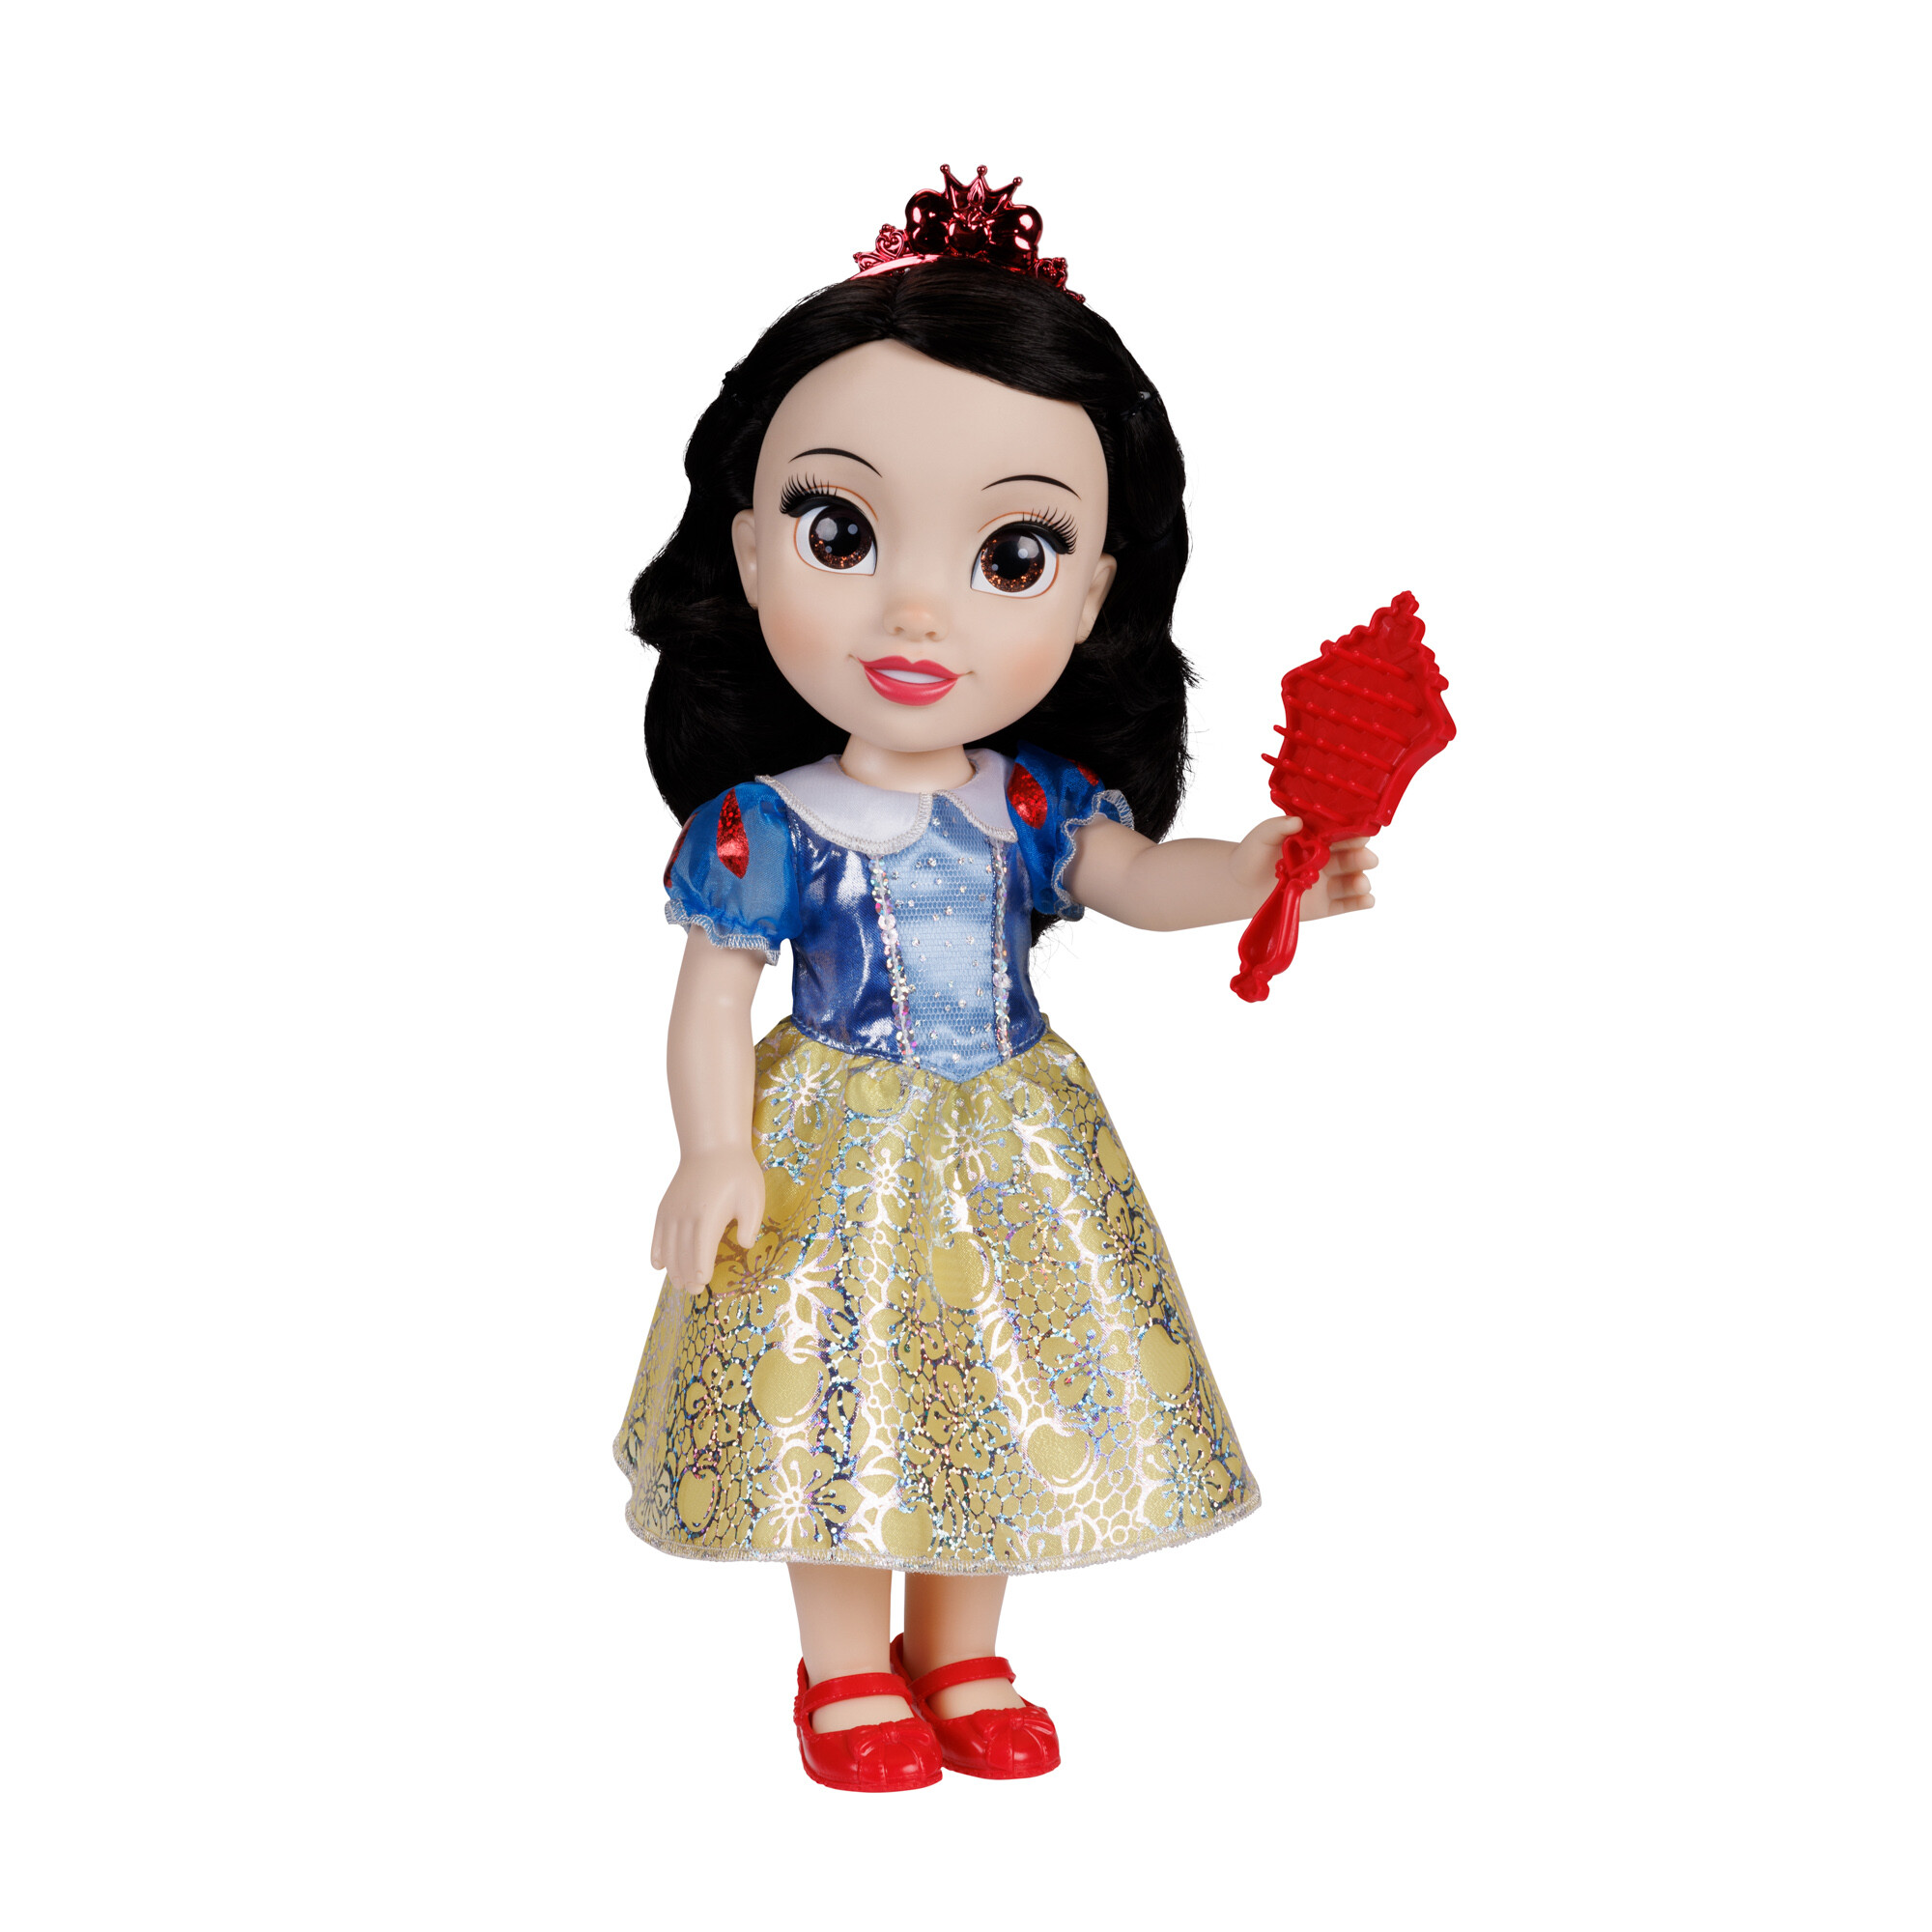 Disney princess bambola da 38 cm di biancaneve con occhi scintillanti! - DISNEY PRINCESS